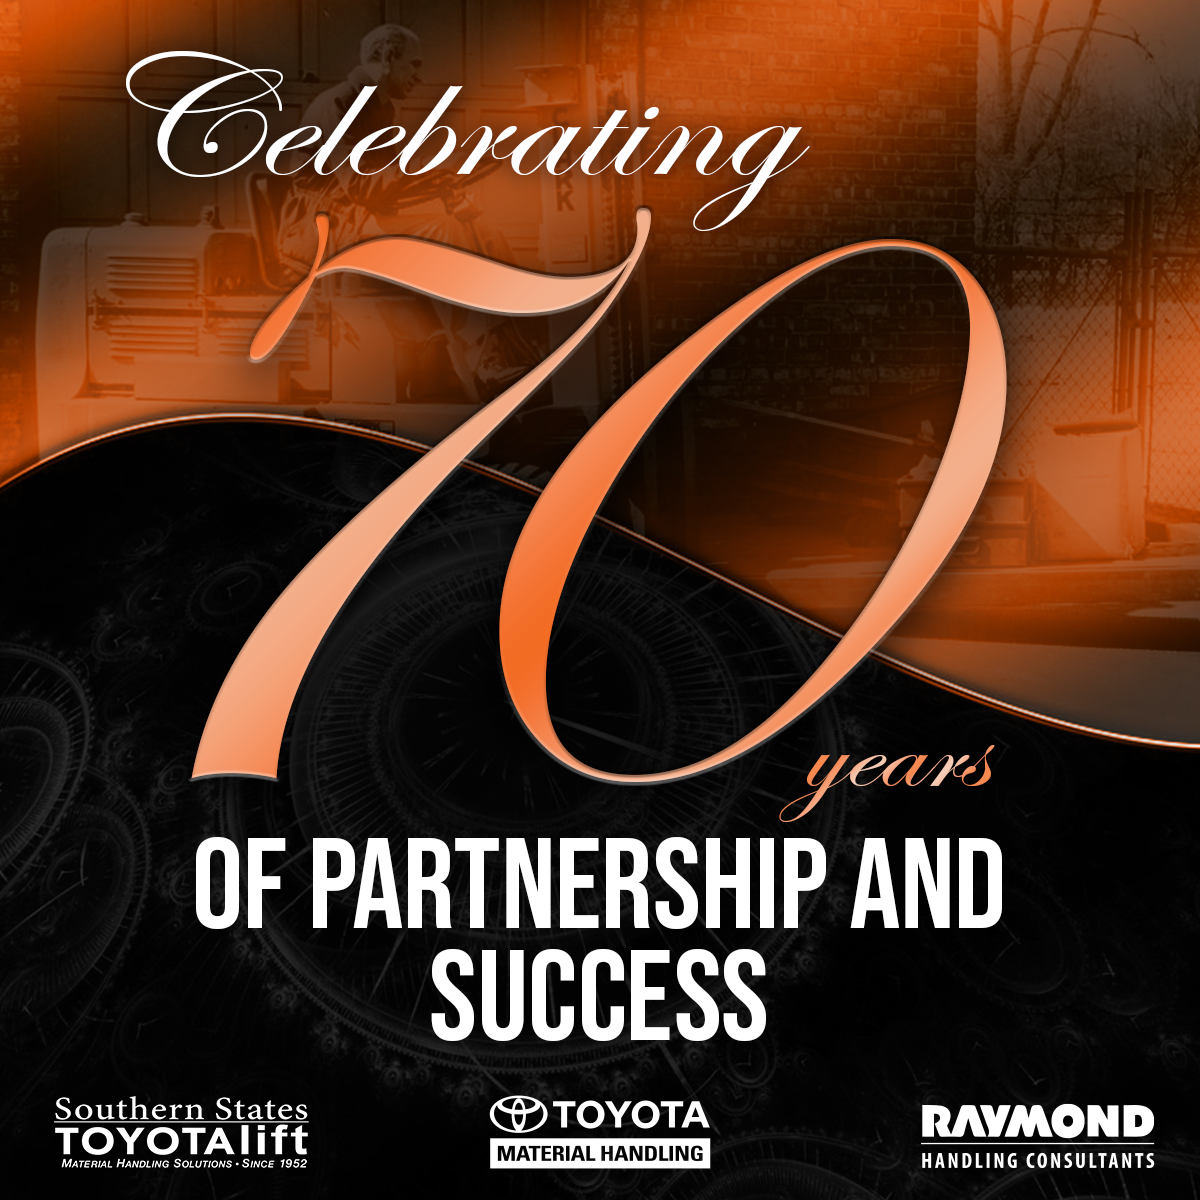 Florida Forklift Dealership Celebrates 70 Years